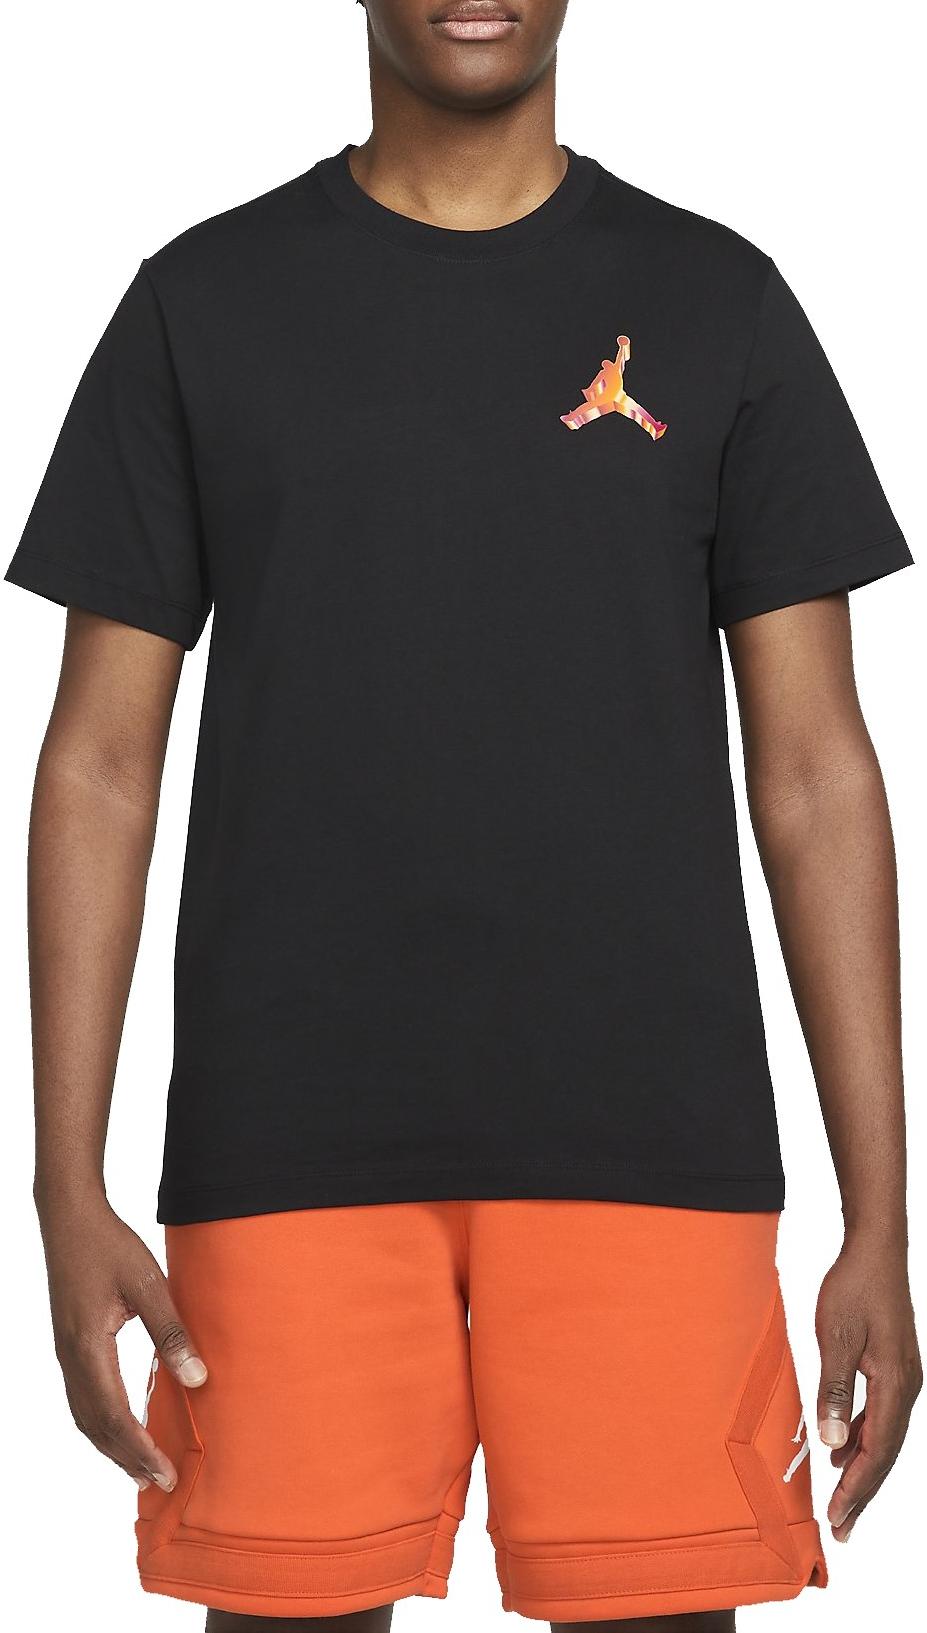 Jordan Jumpman 3D T-Shirt Black Orange 